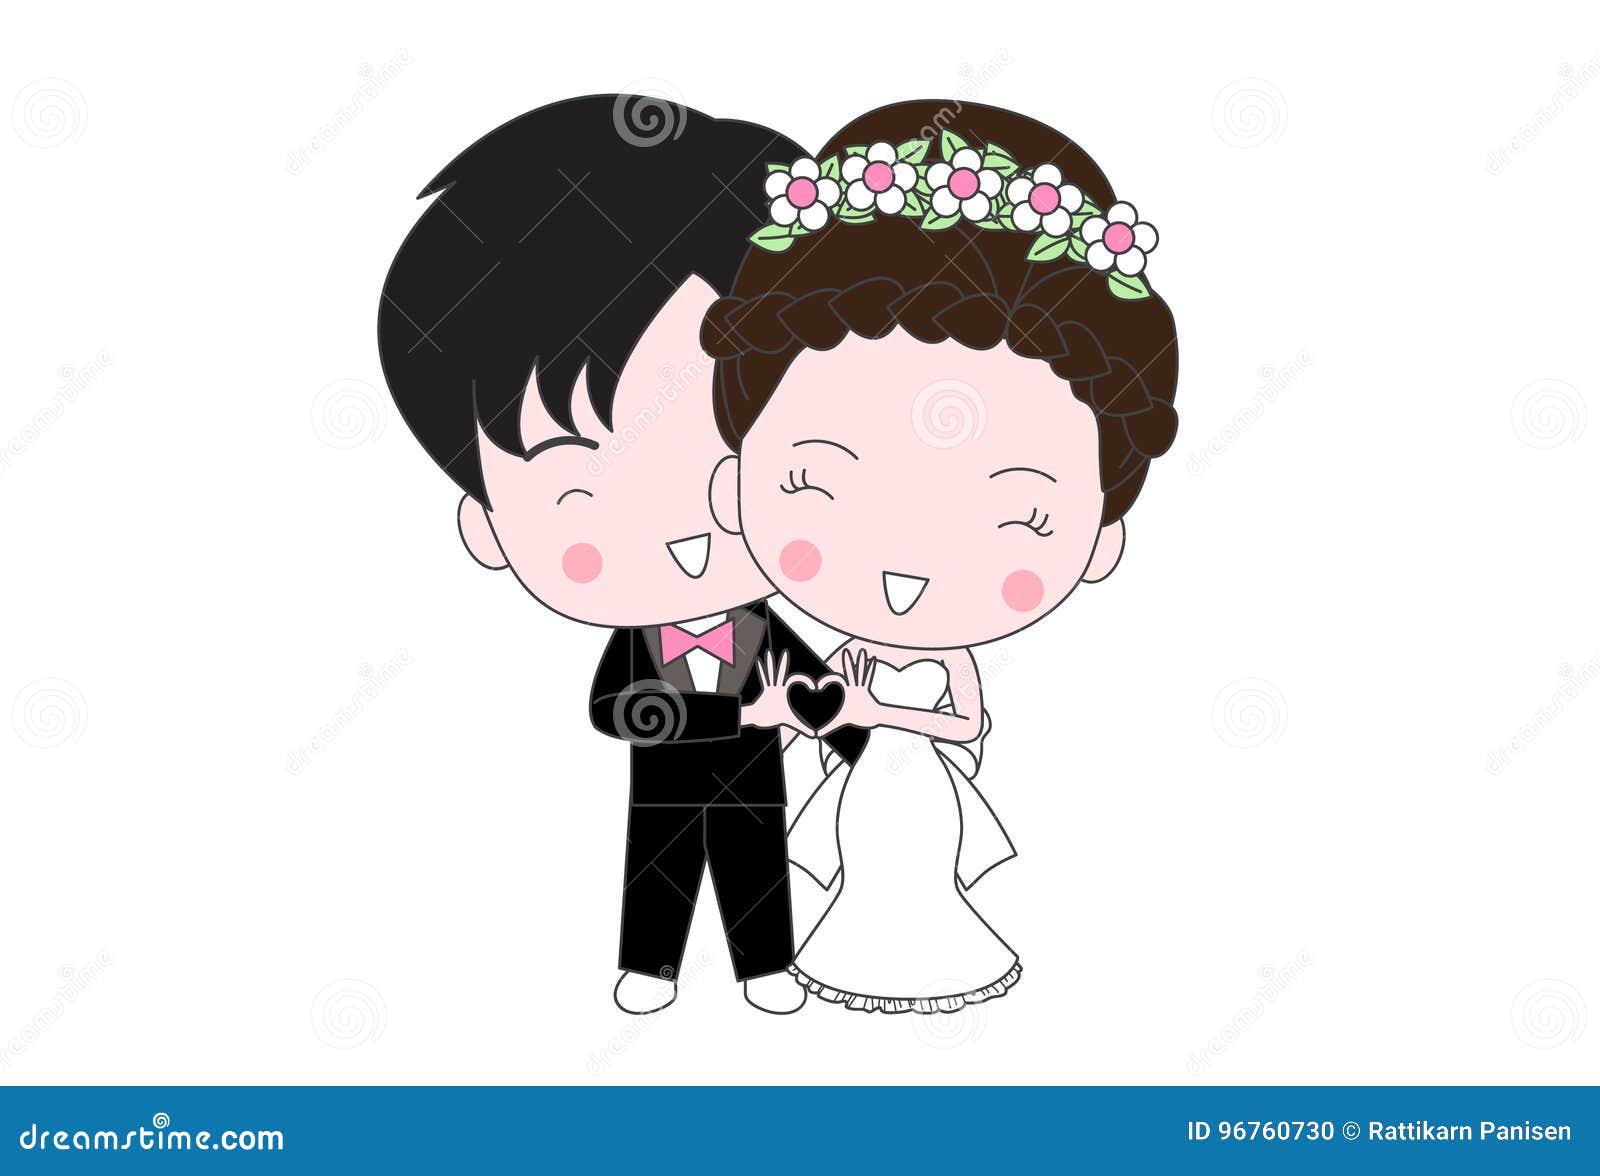 Cute wedding cartoon stock illustration. Illustration of couple - 96760730